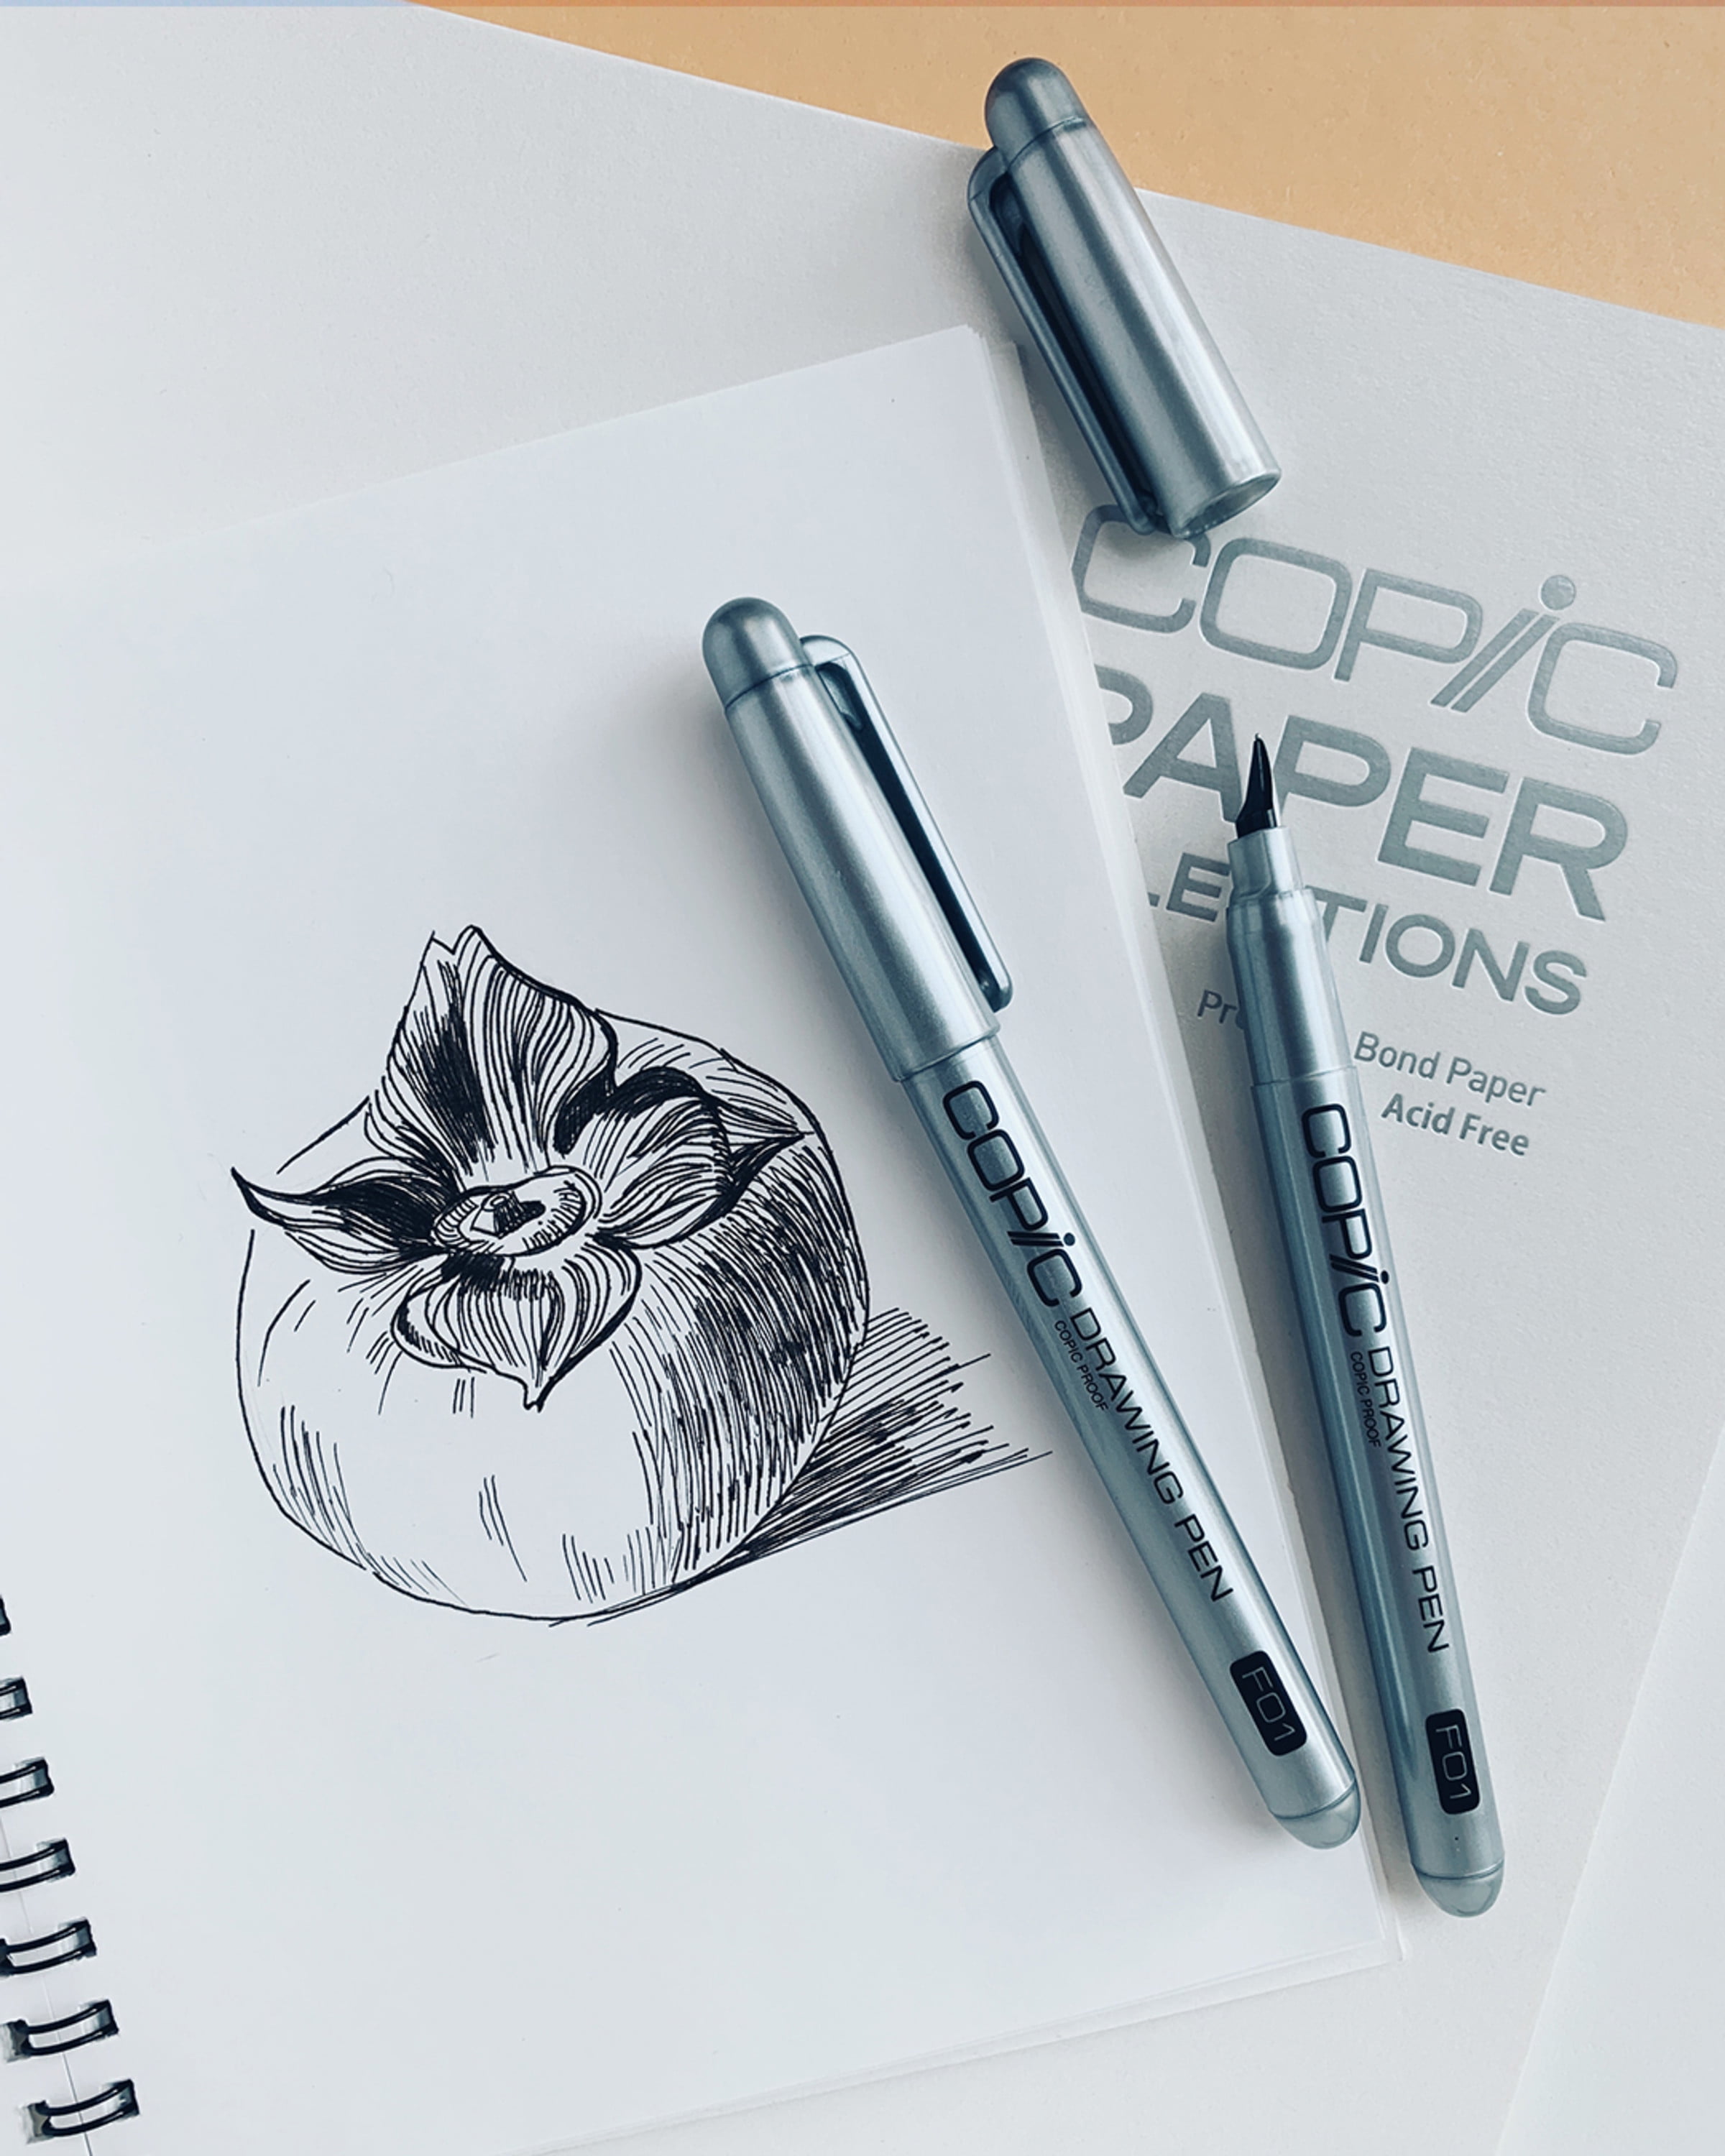 Copic Drawing Pen, F02, Black 